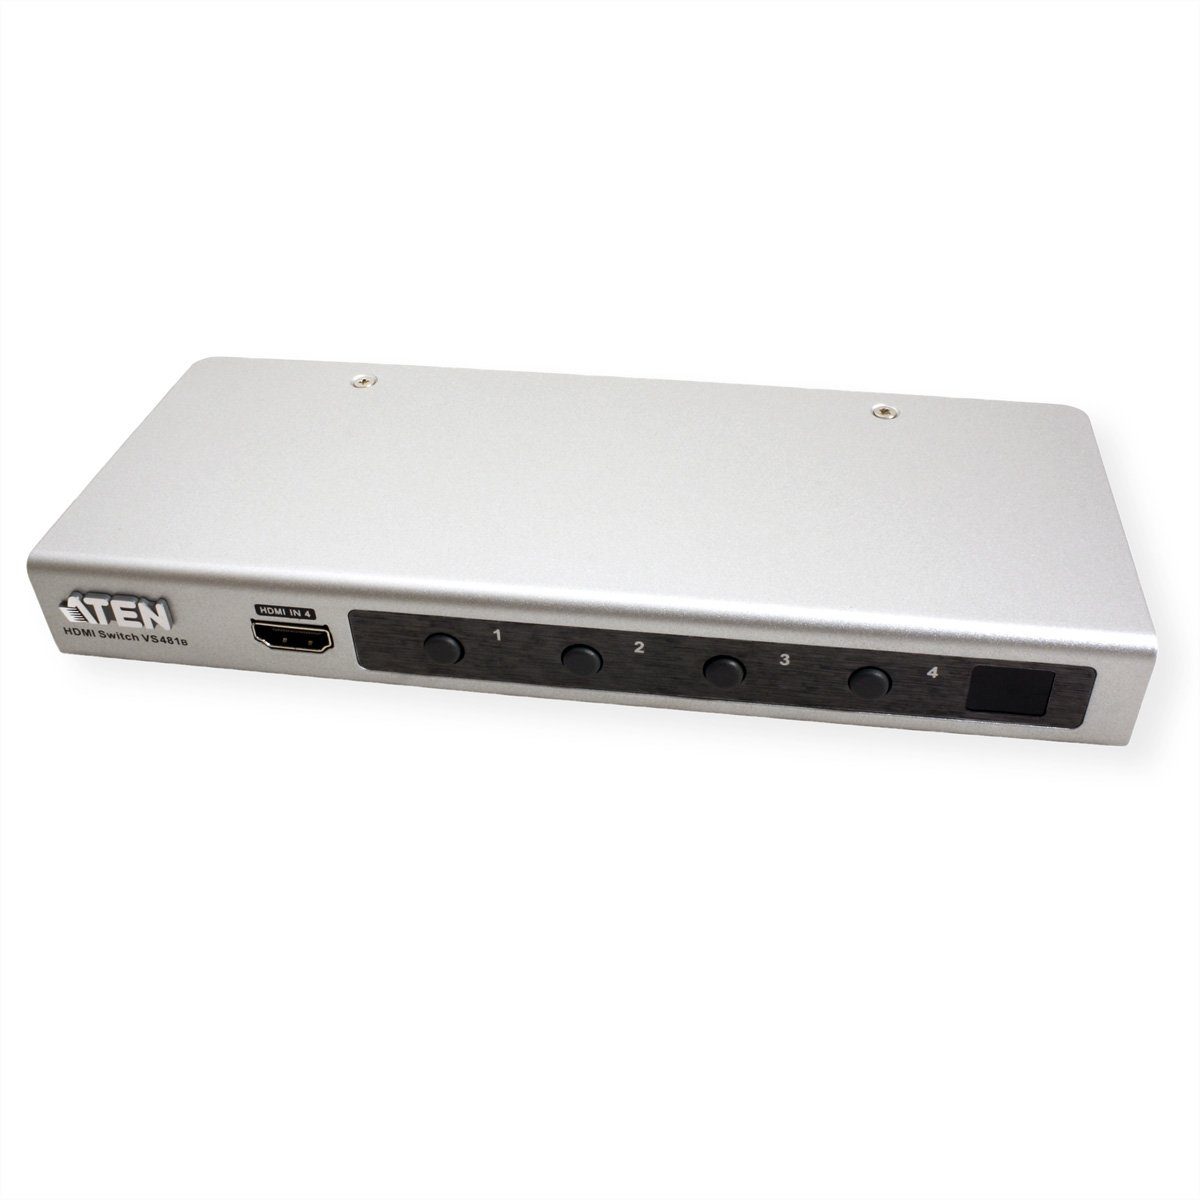 Video-Adapter HDMI mit Aten VS481B HD & 4K Ultra 4 Switch Ports Audio-